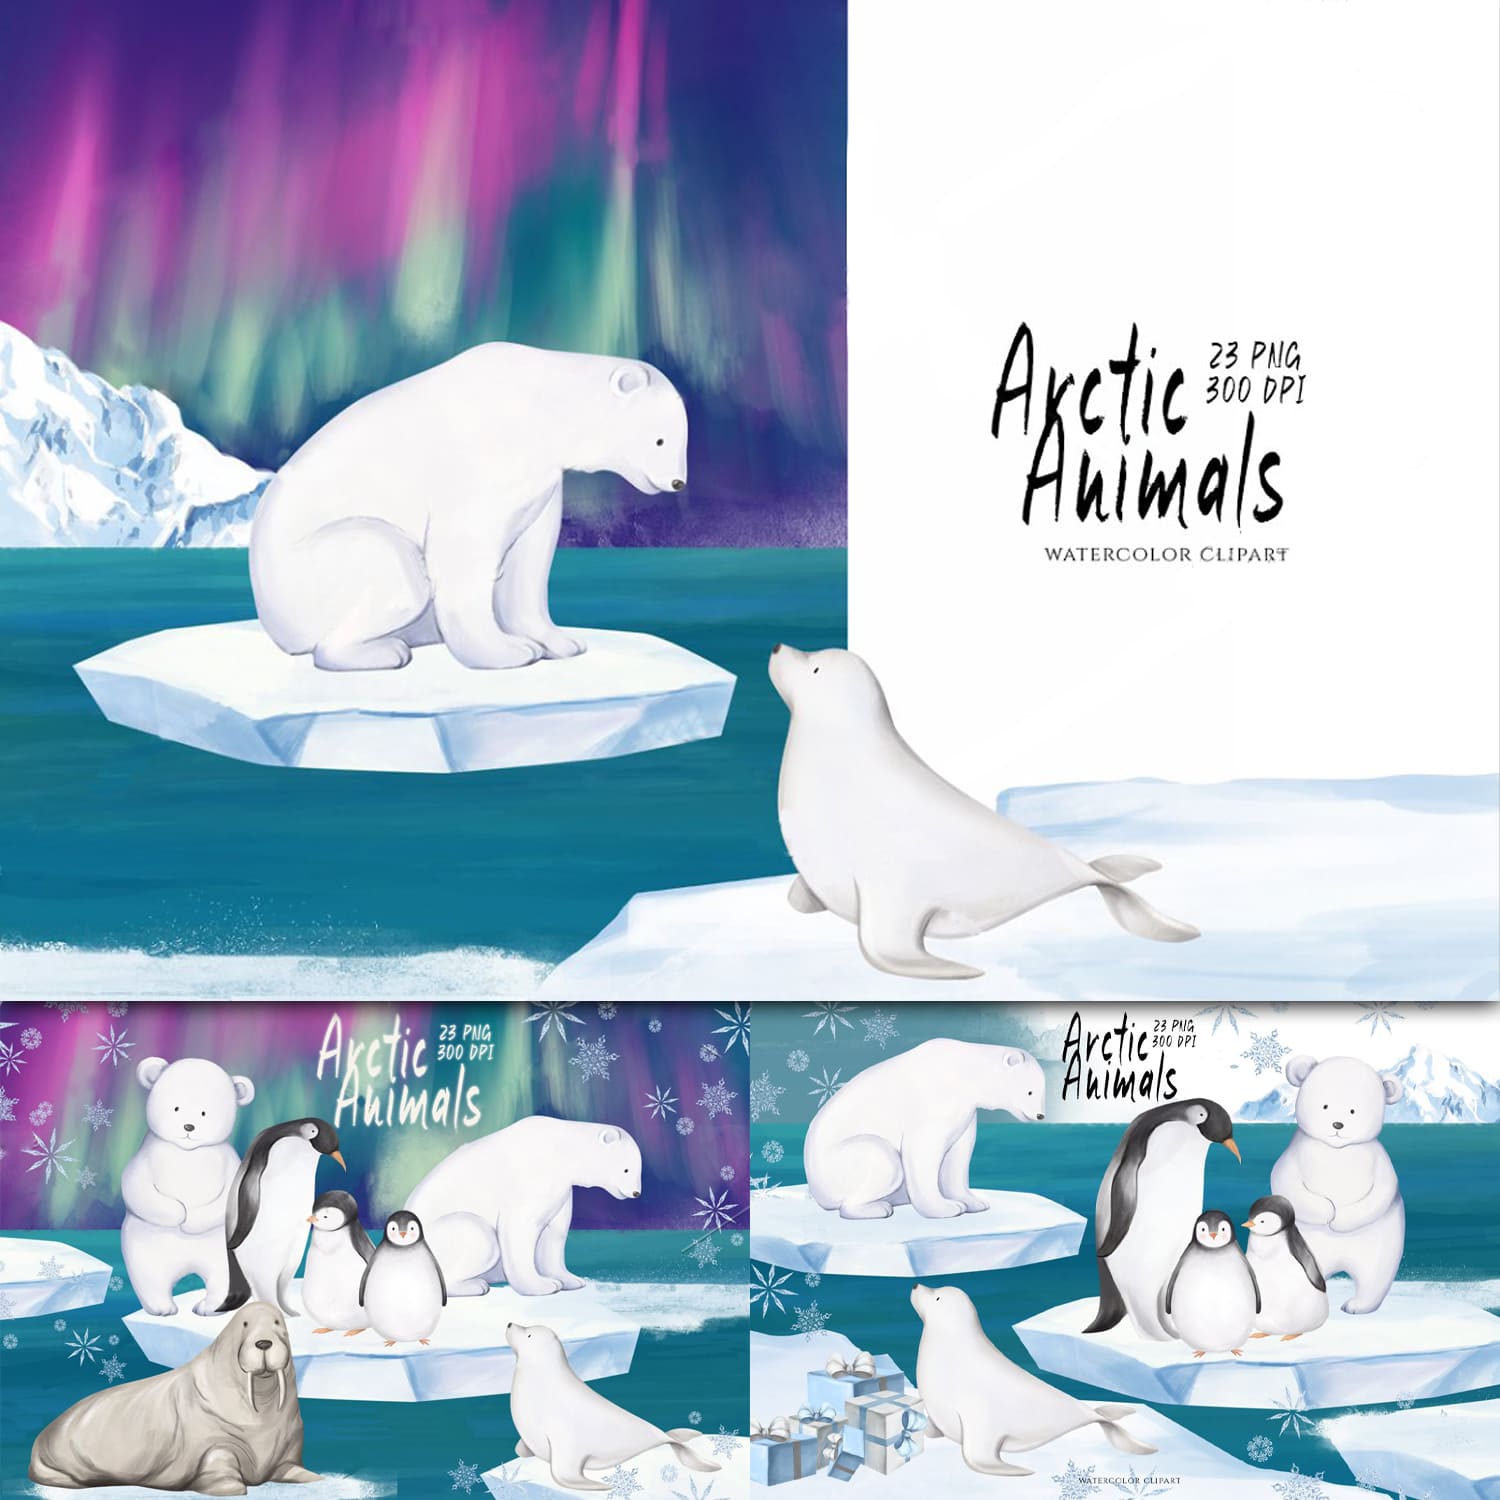 Arctic Animals Watercolor Clipart cover.